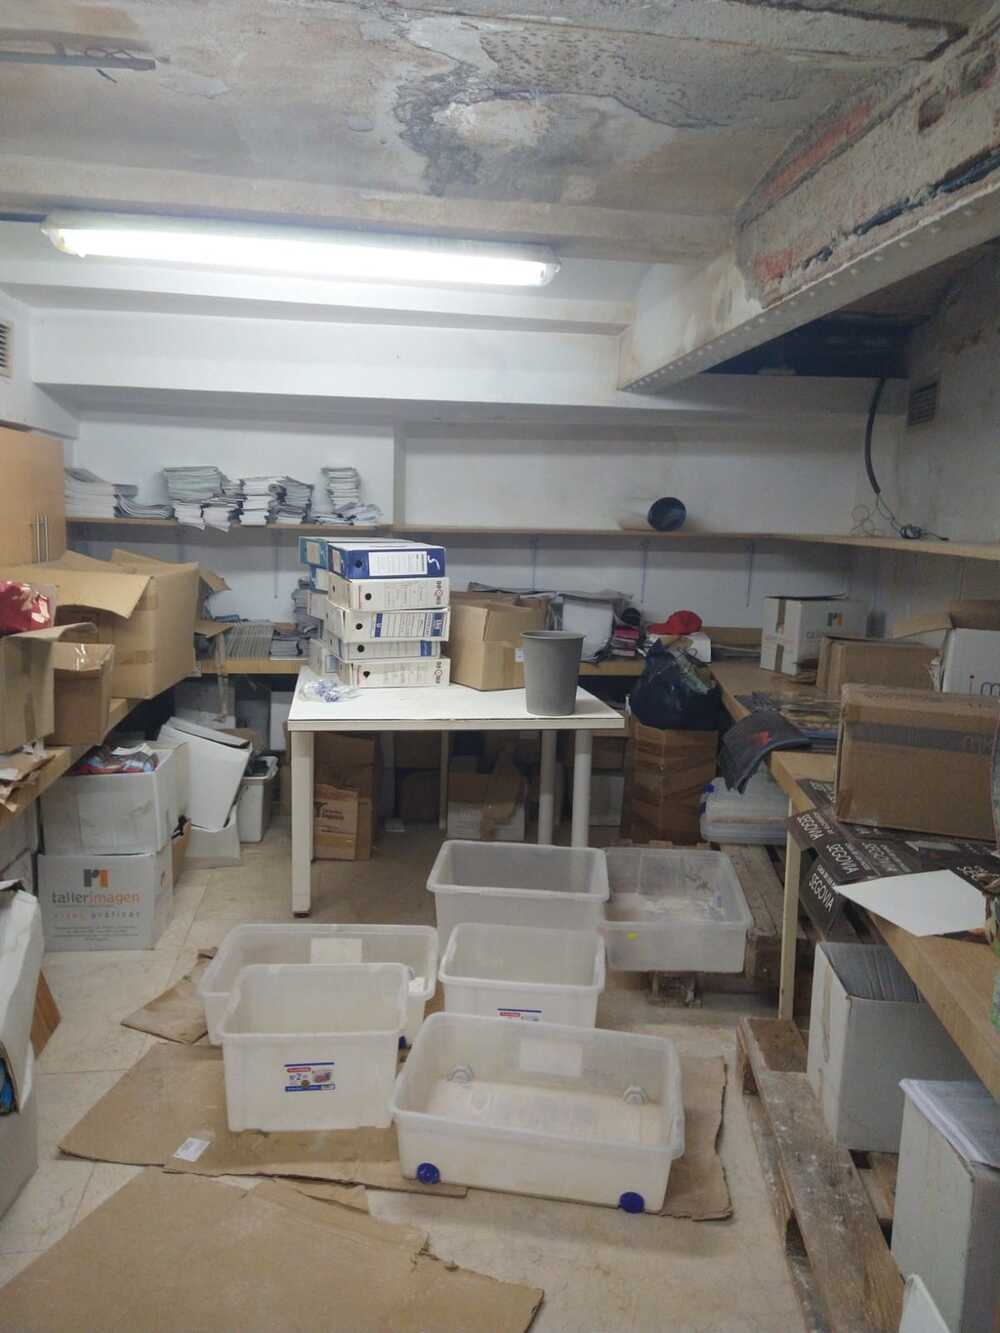 Sala de almacén de material llena de cubos para las goteras.